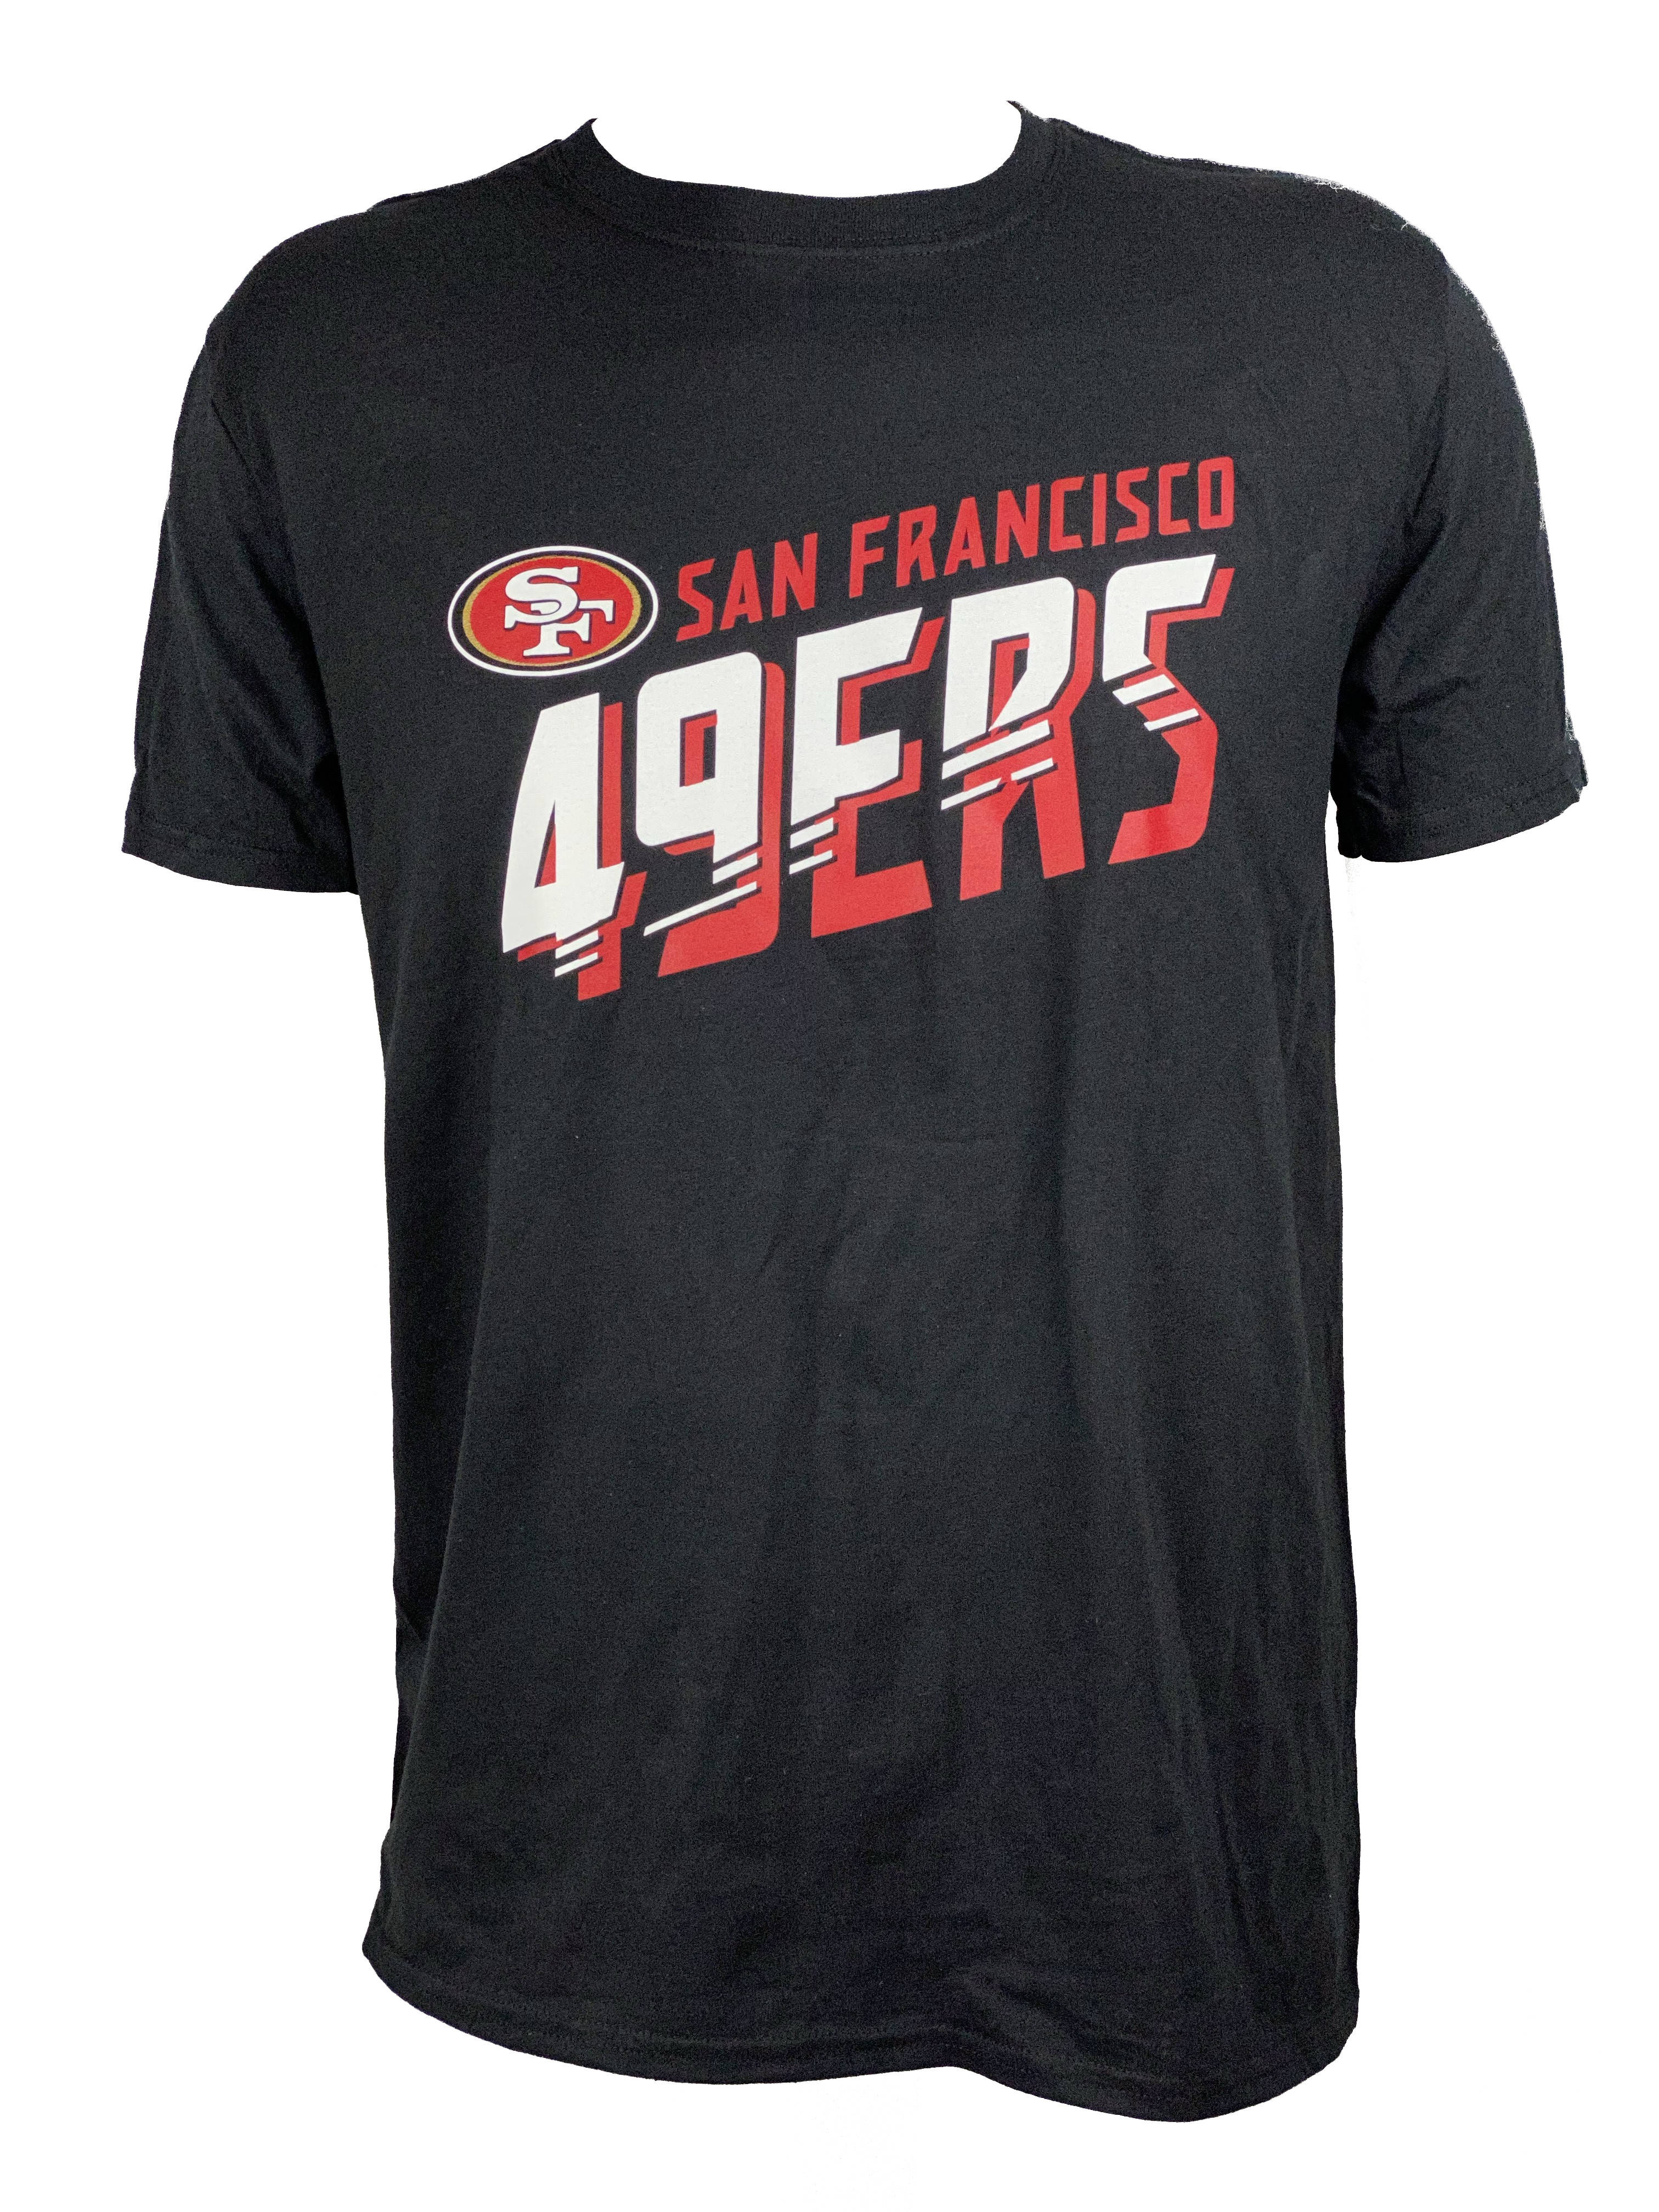 Men's San Francisco 49ers Gear, Mens 49ers Apparel, Guys Clothes